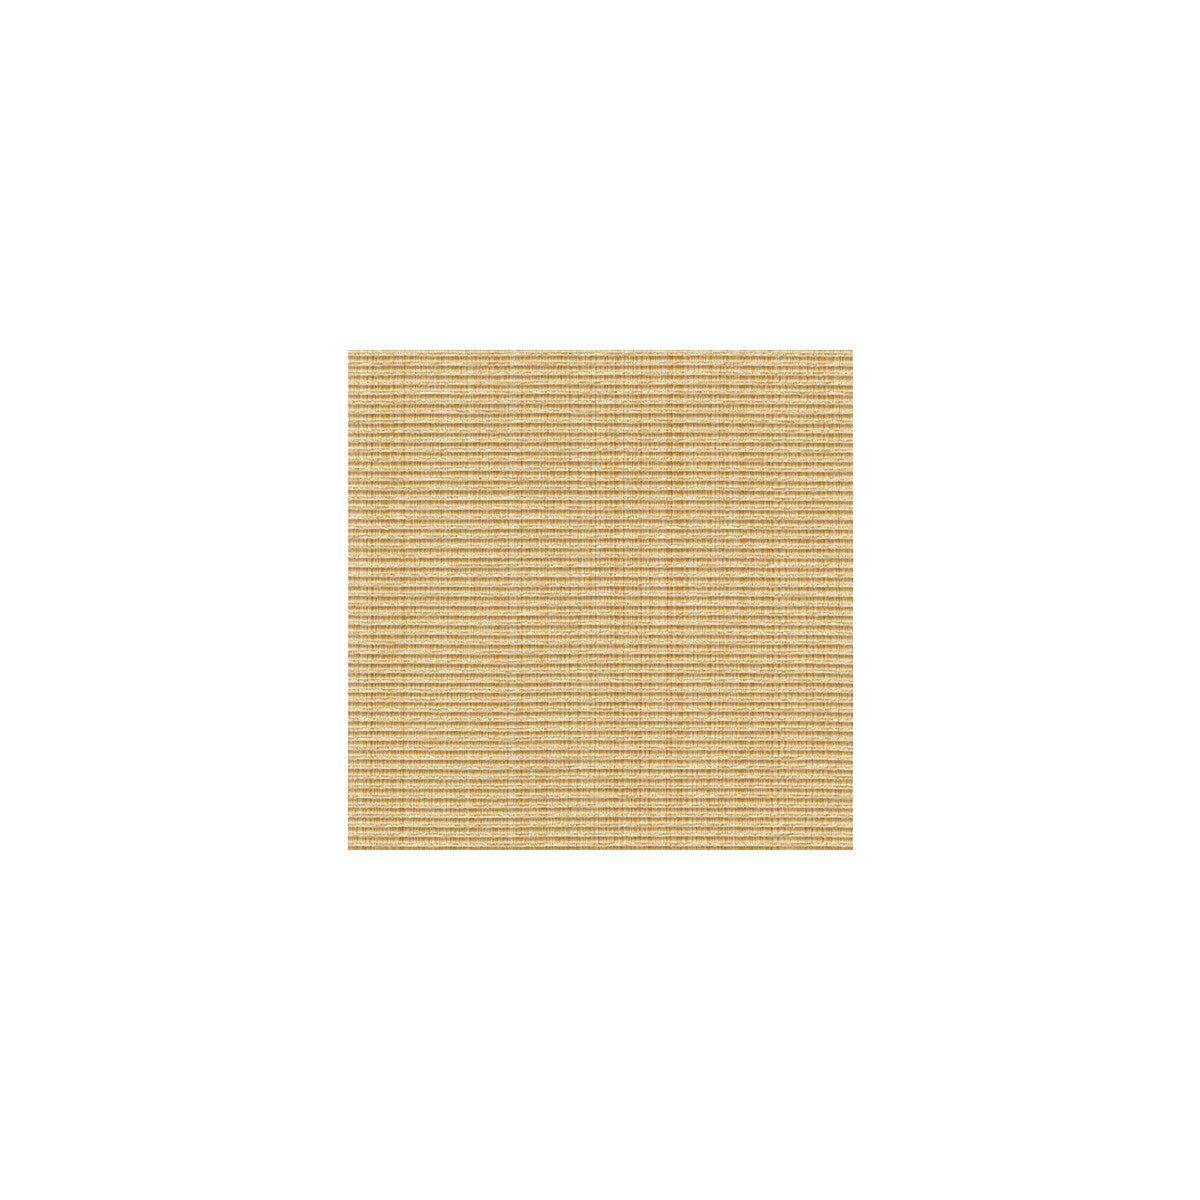 Kravet Smart fabric in 31110-16 color - pattern 31110.16.0 - by Kravet Smart